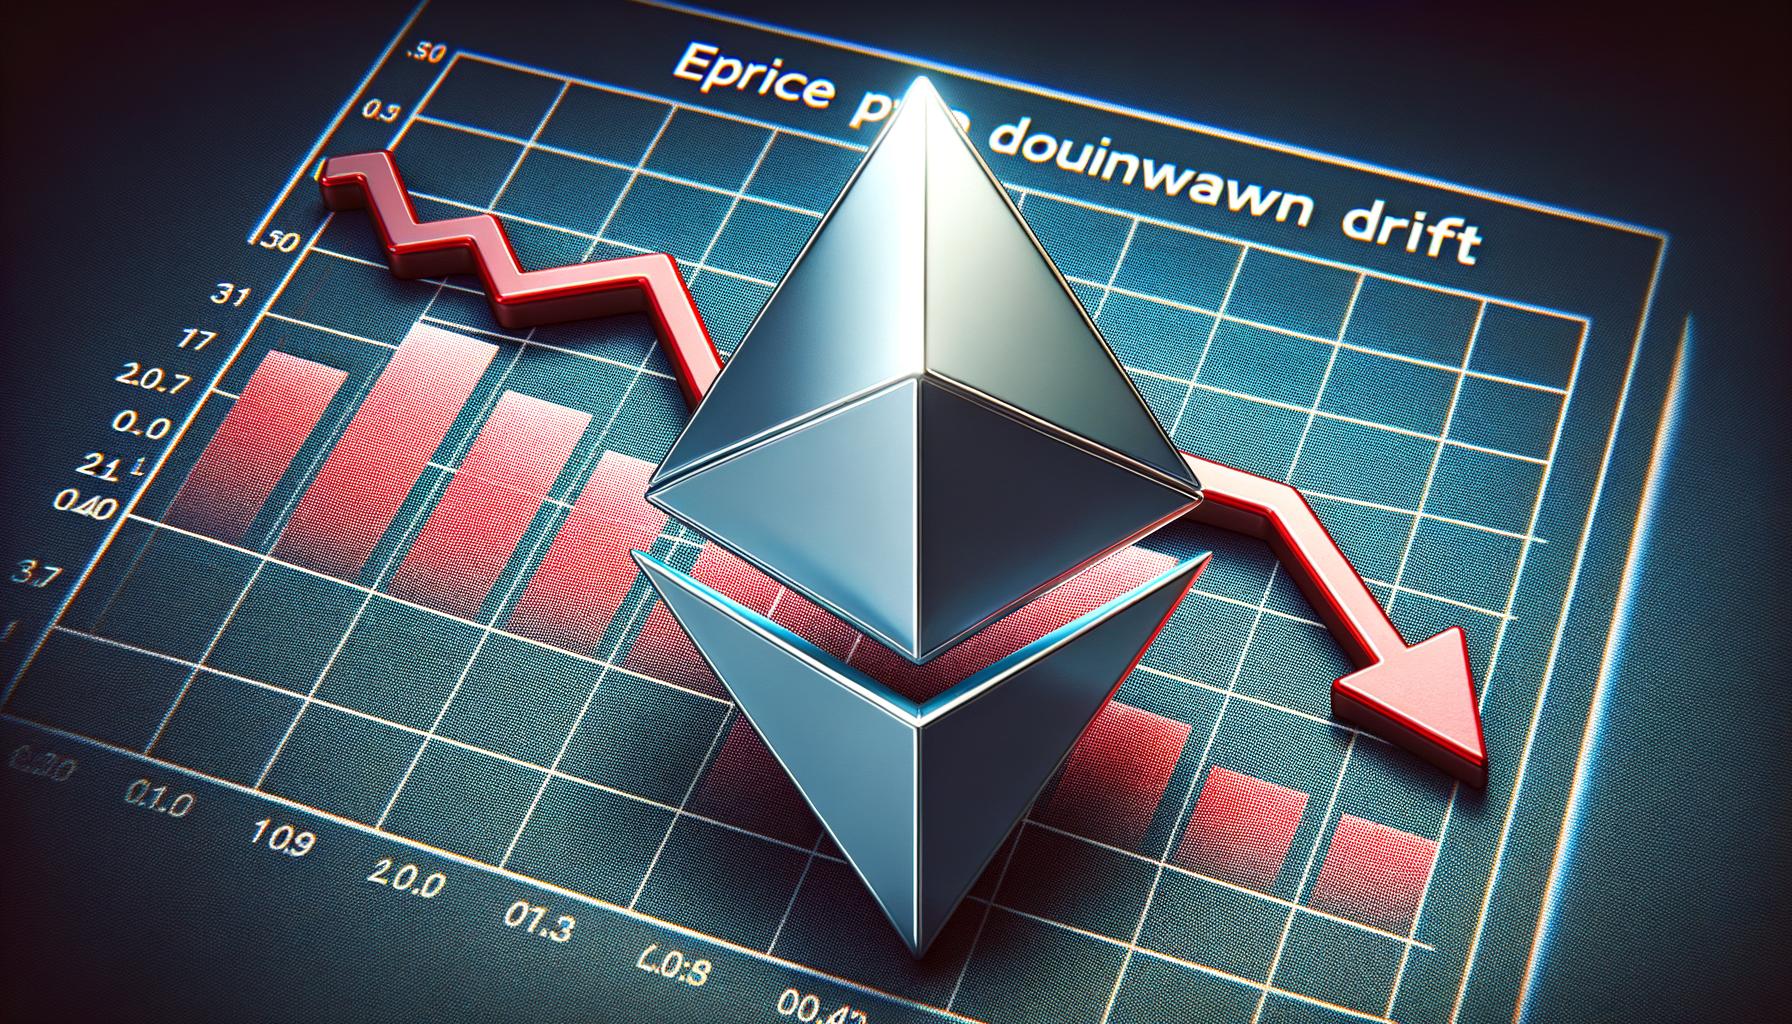 Ethereum Price Downward Drift: Decline Resumes Again